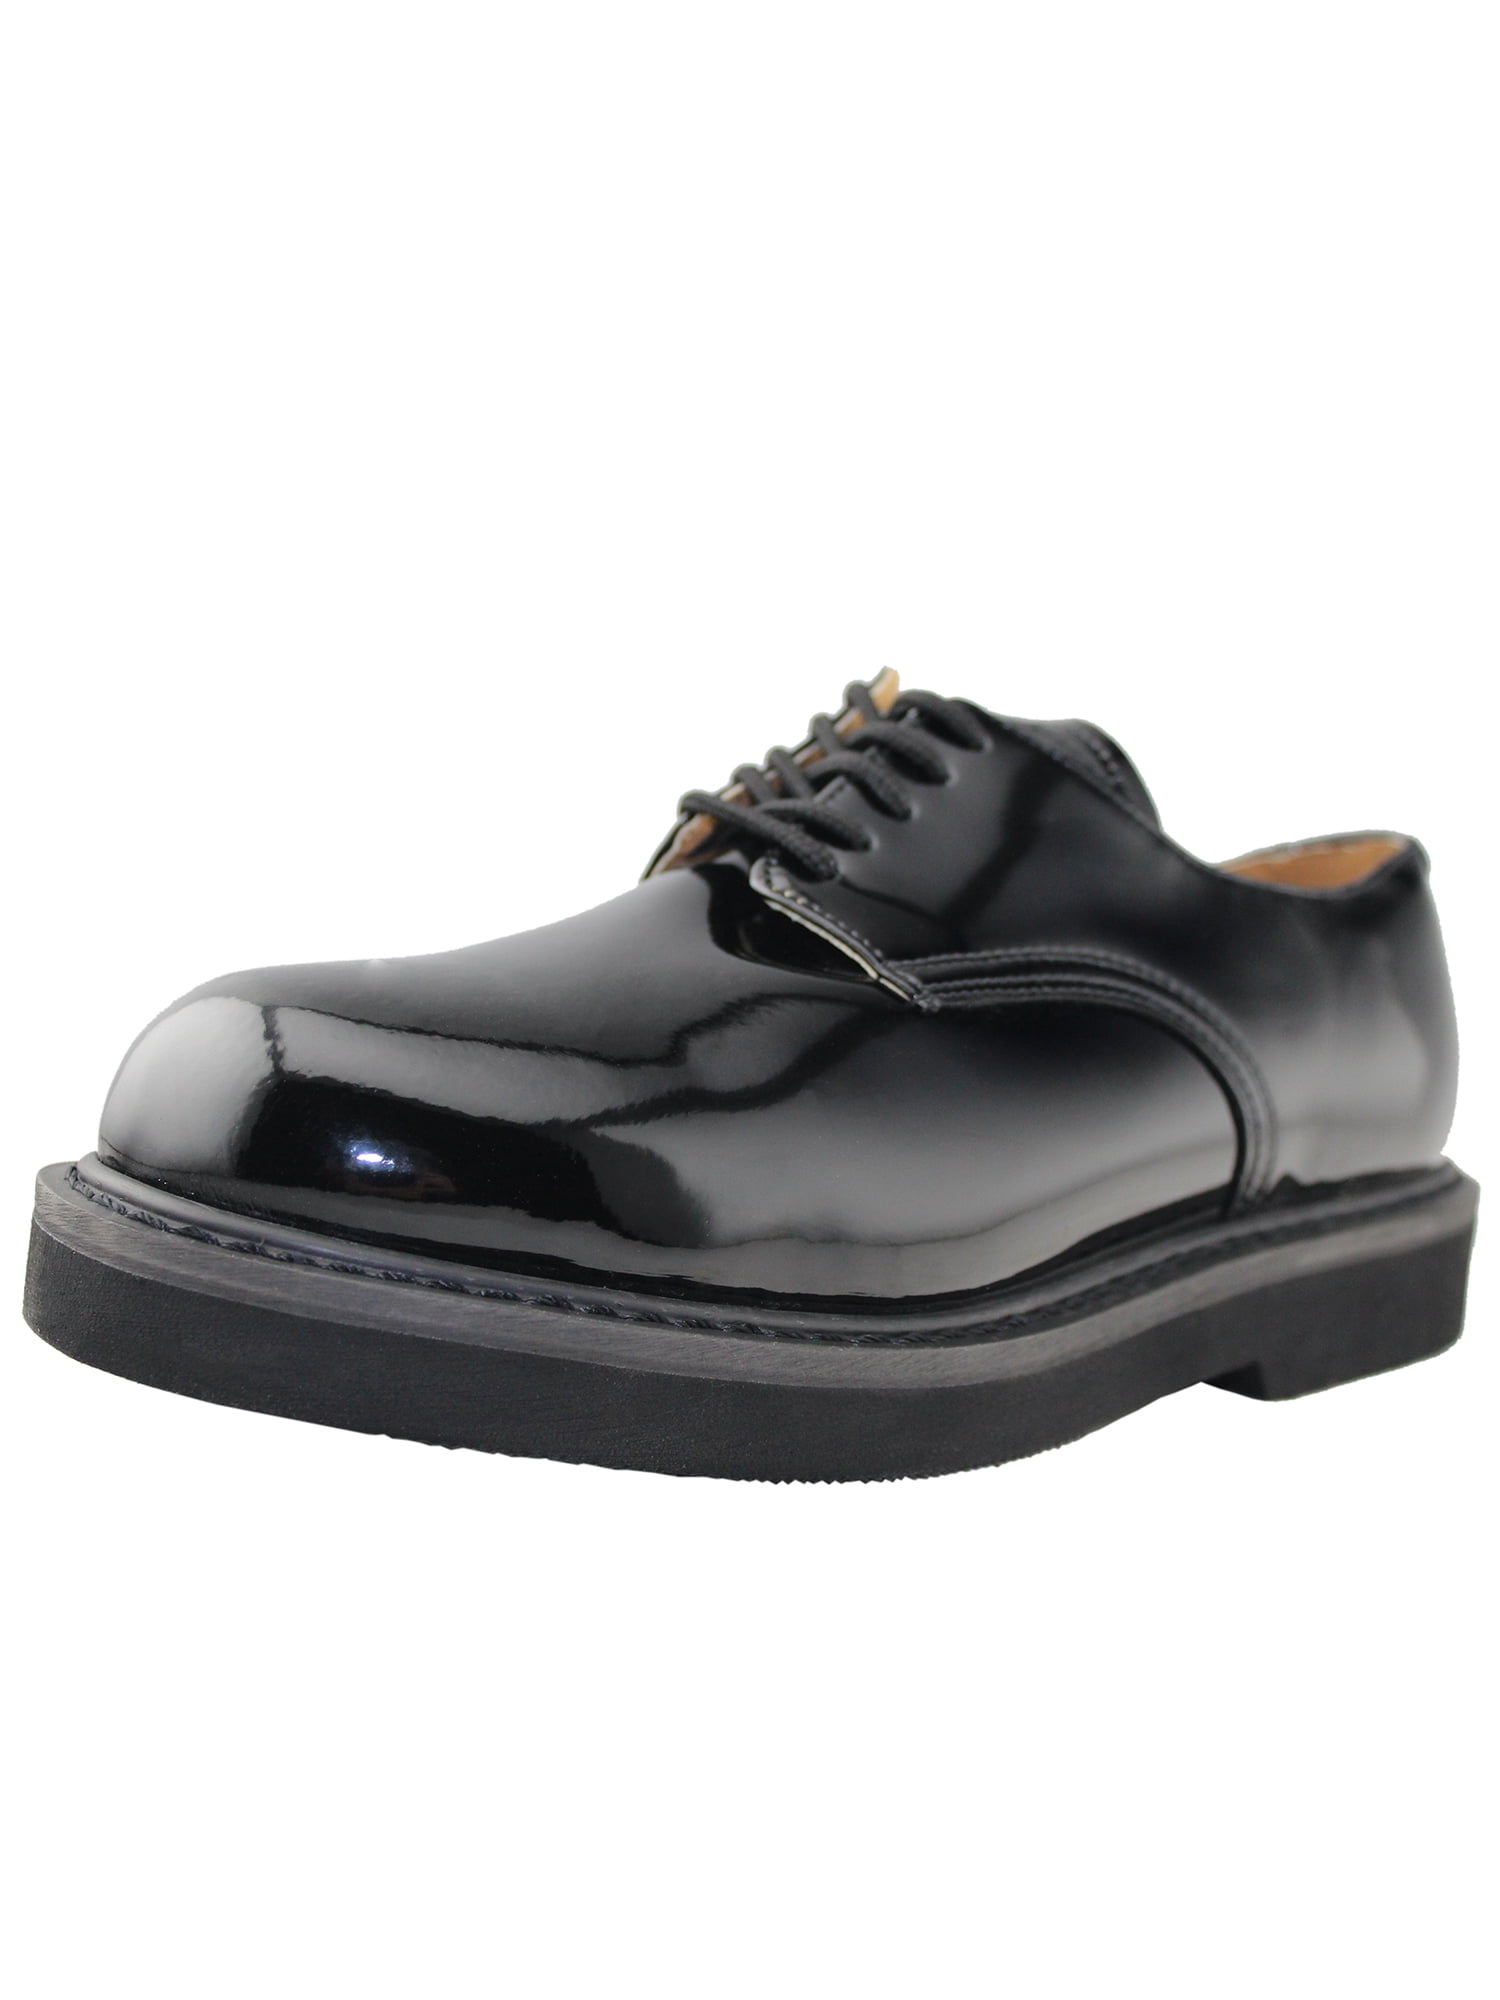 Ownshoe Men's Oxford Work Shoes Black 